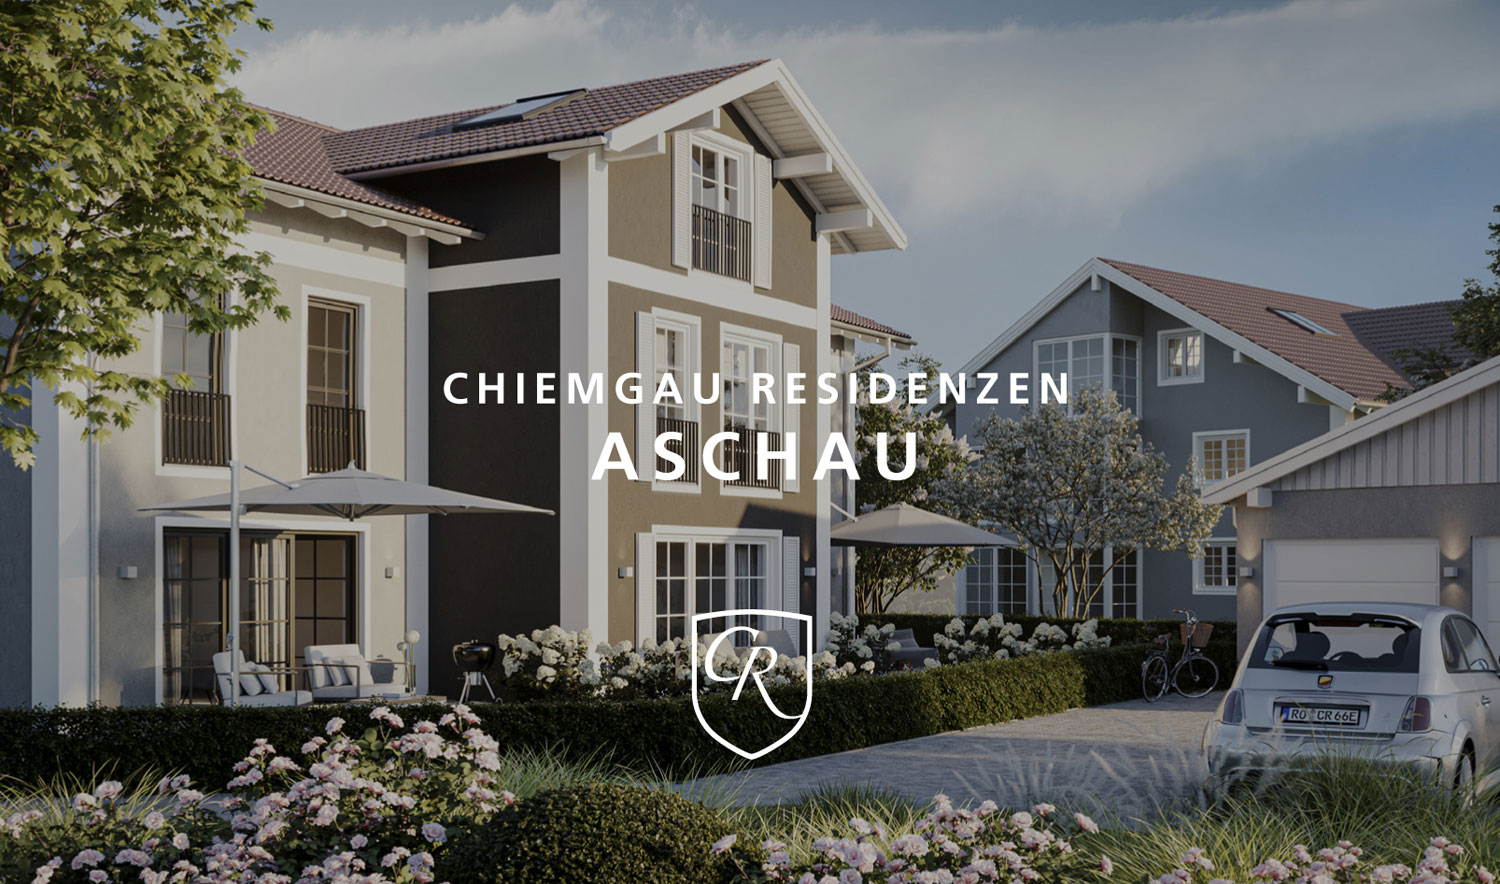 Chiemgau Residenzen Aschau